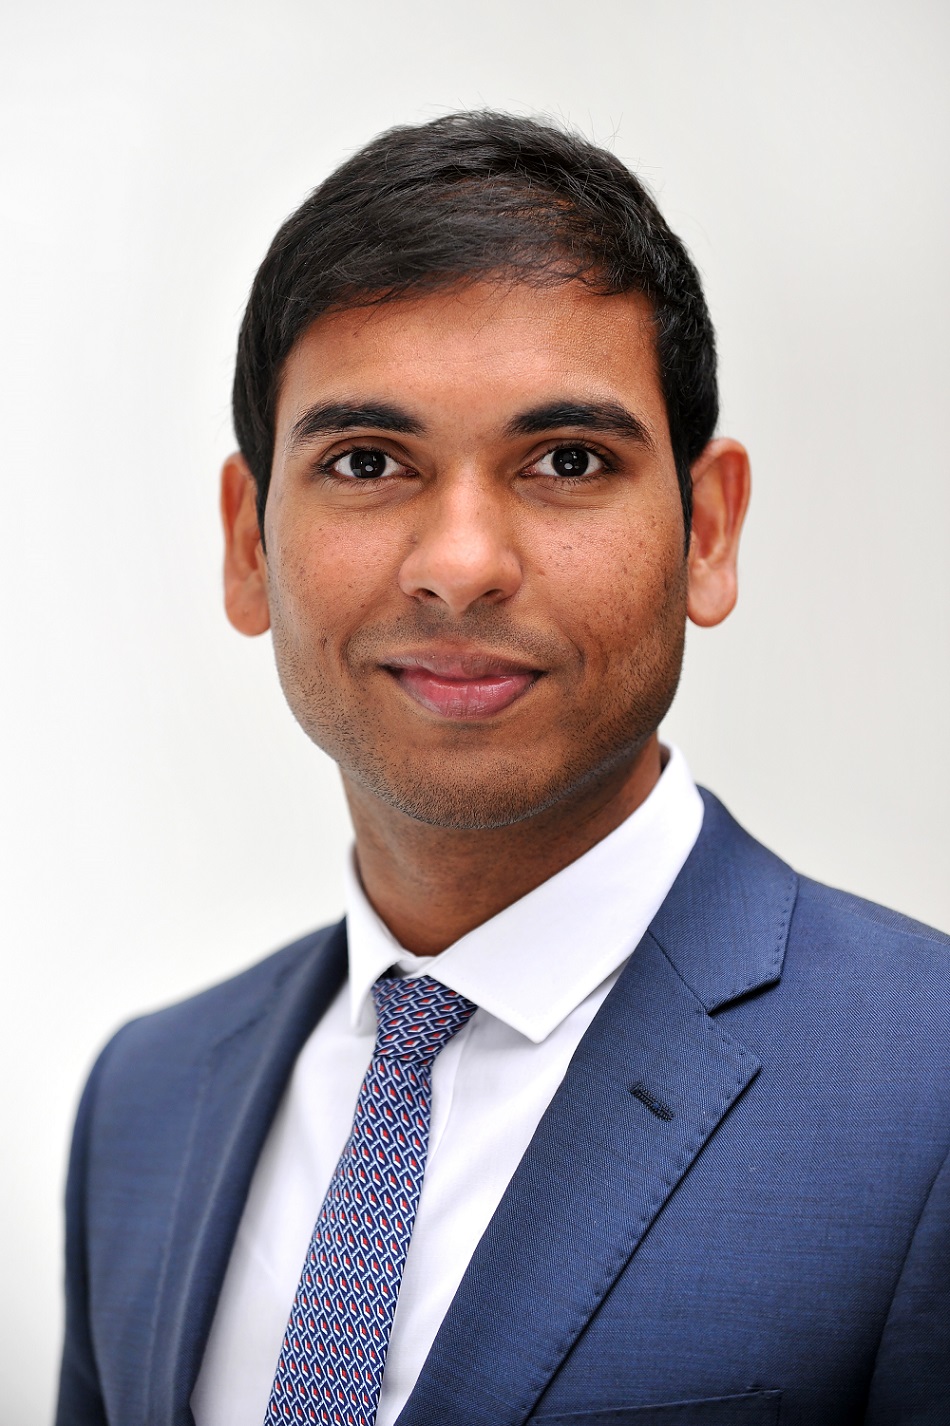 Sankar Sivarajah, Professor of Technology Management at the University of Bradford